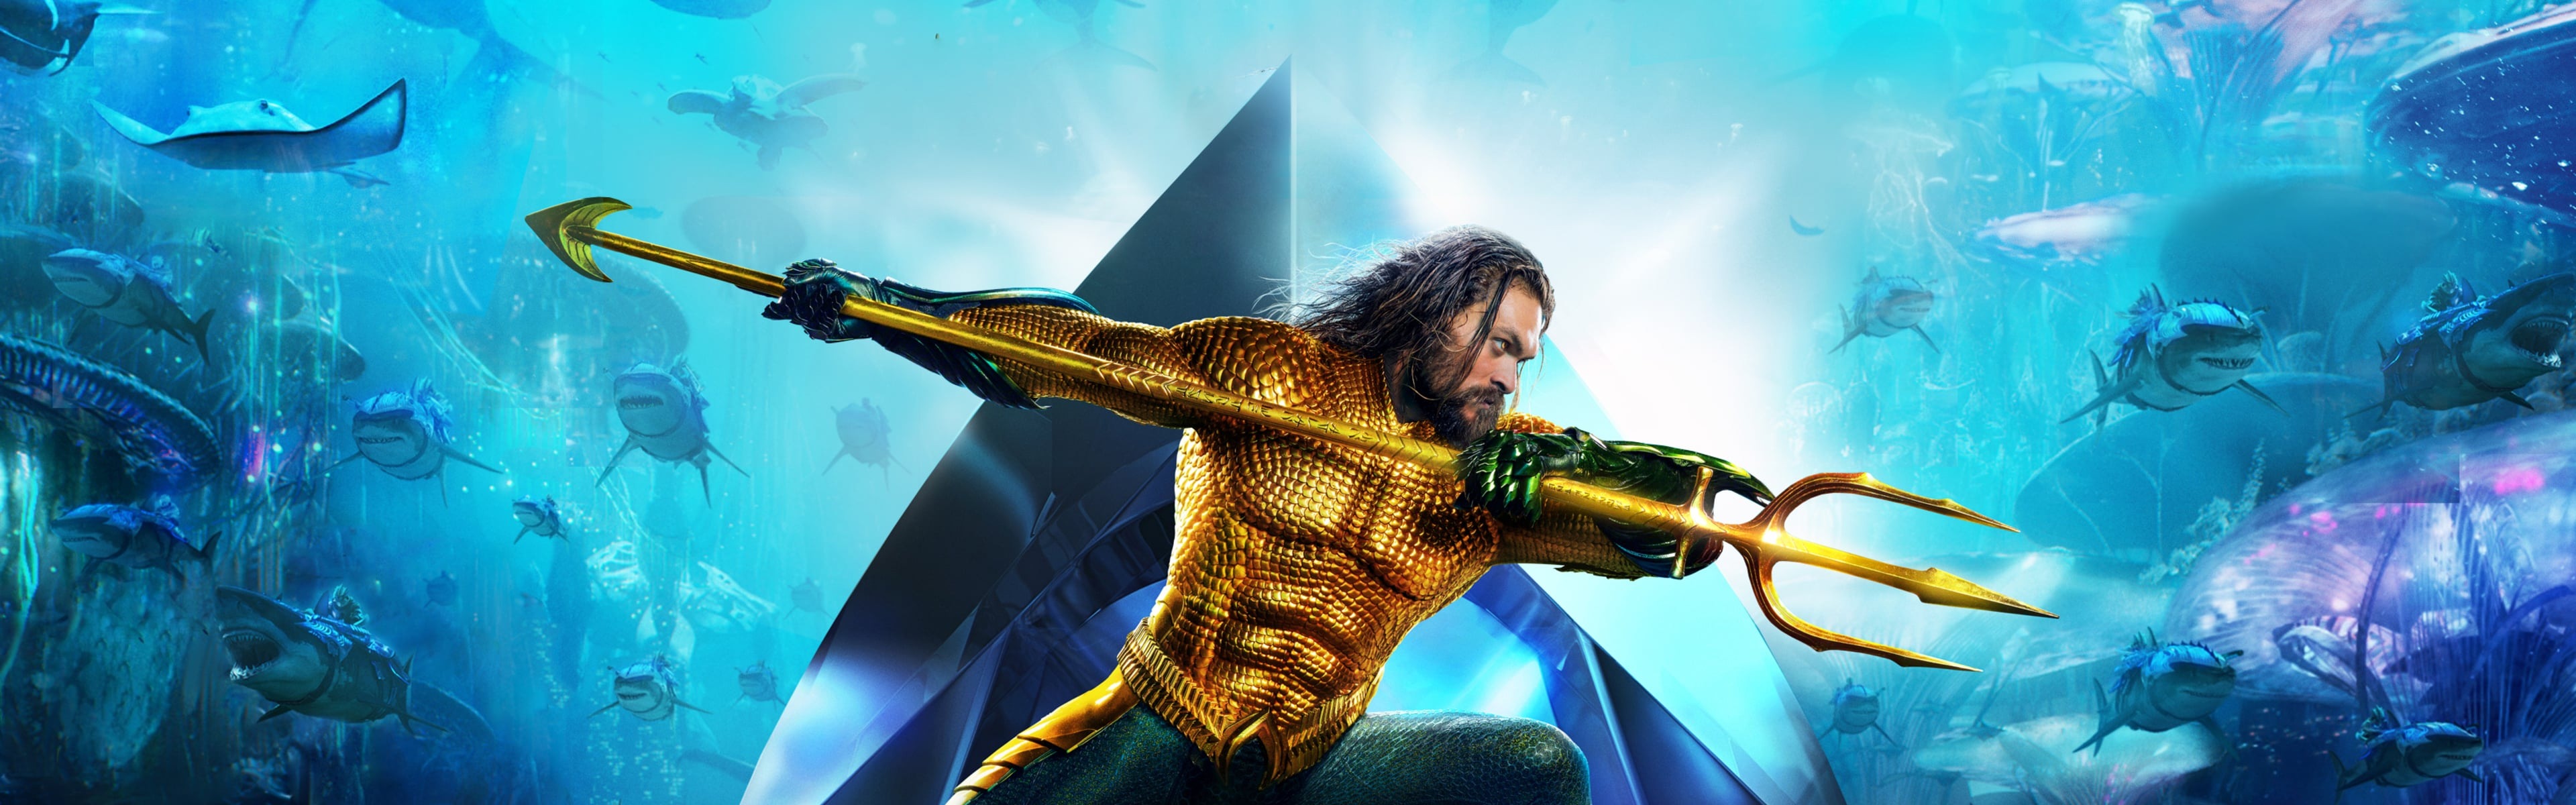 Aquaman, Marvel movie HD wallpapers #15 - 3840x1200